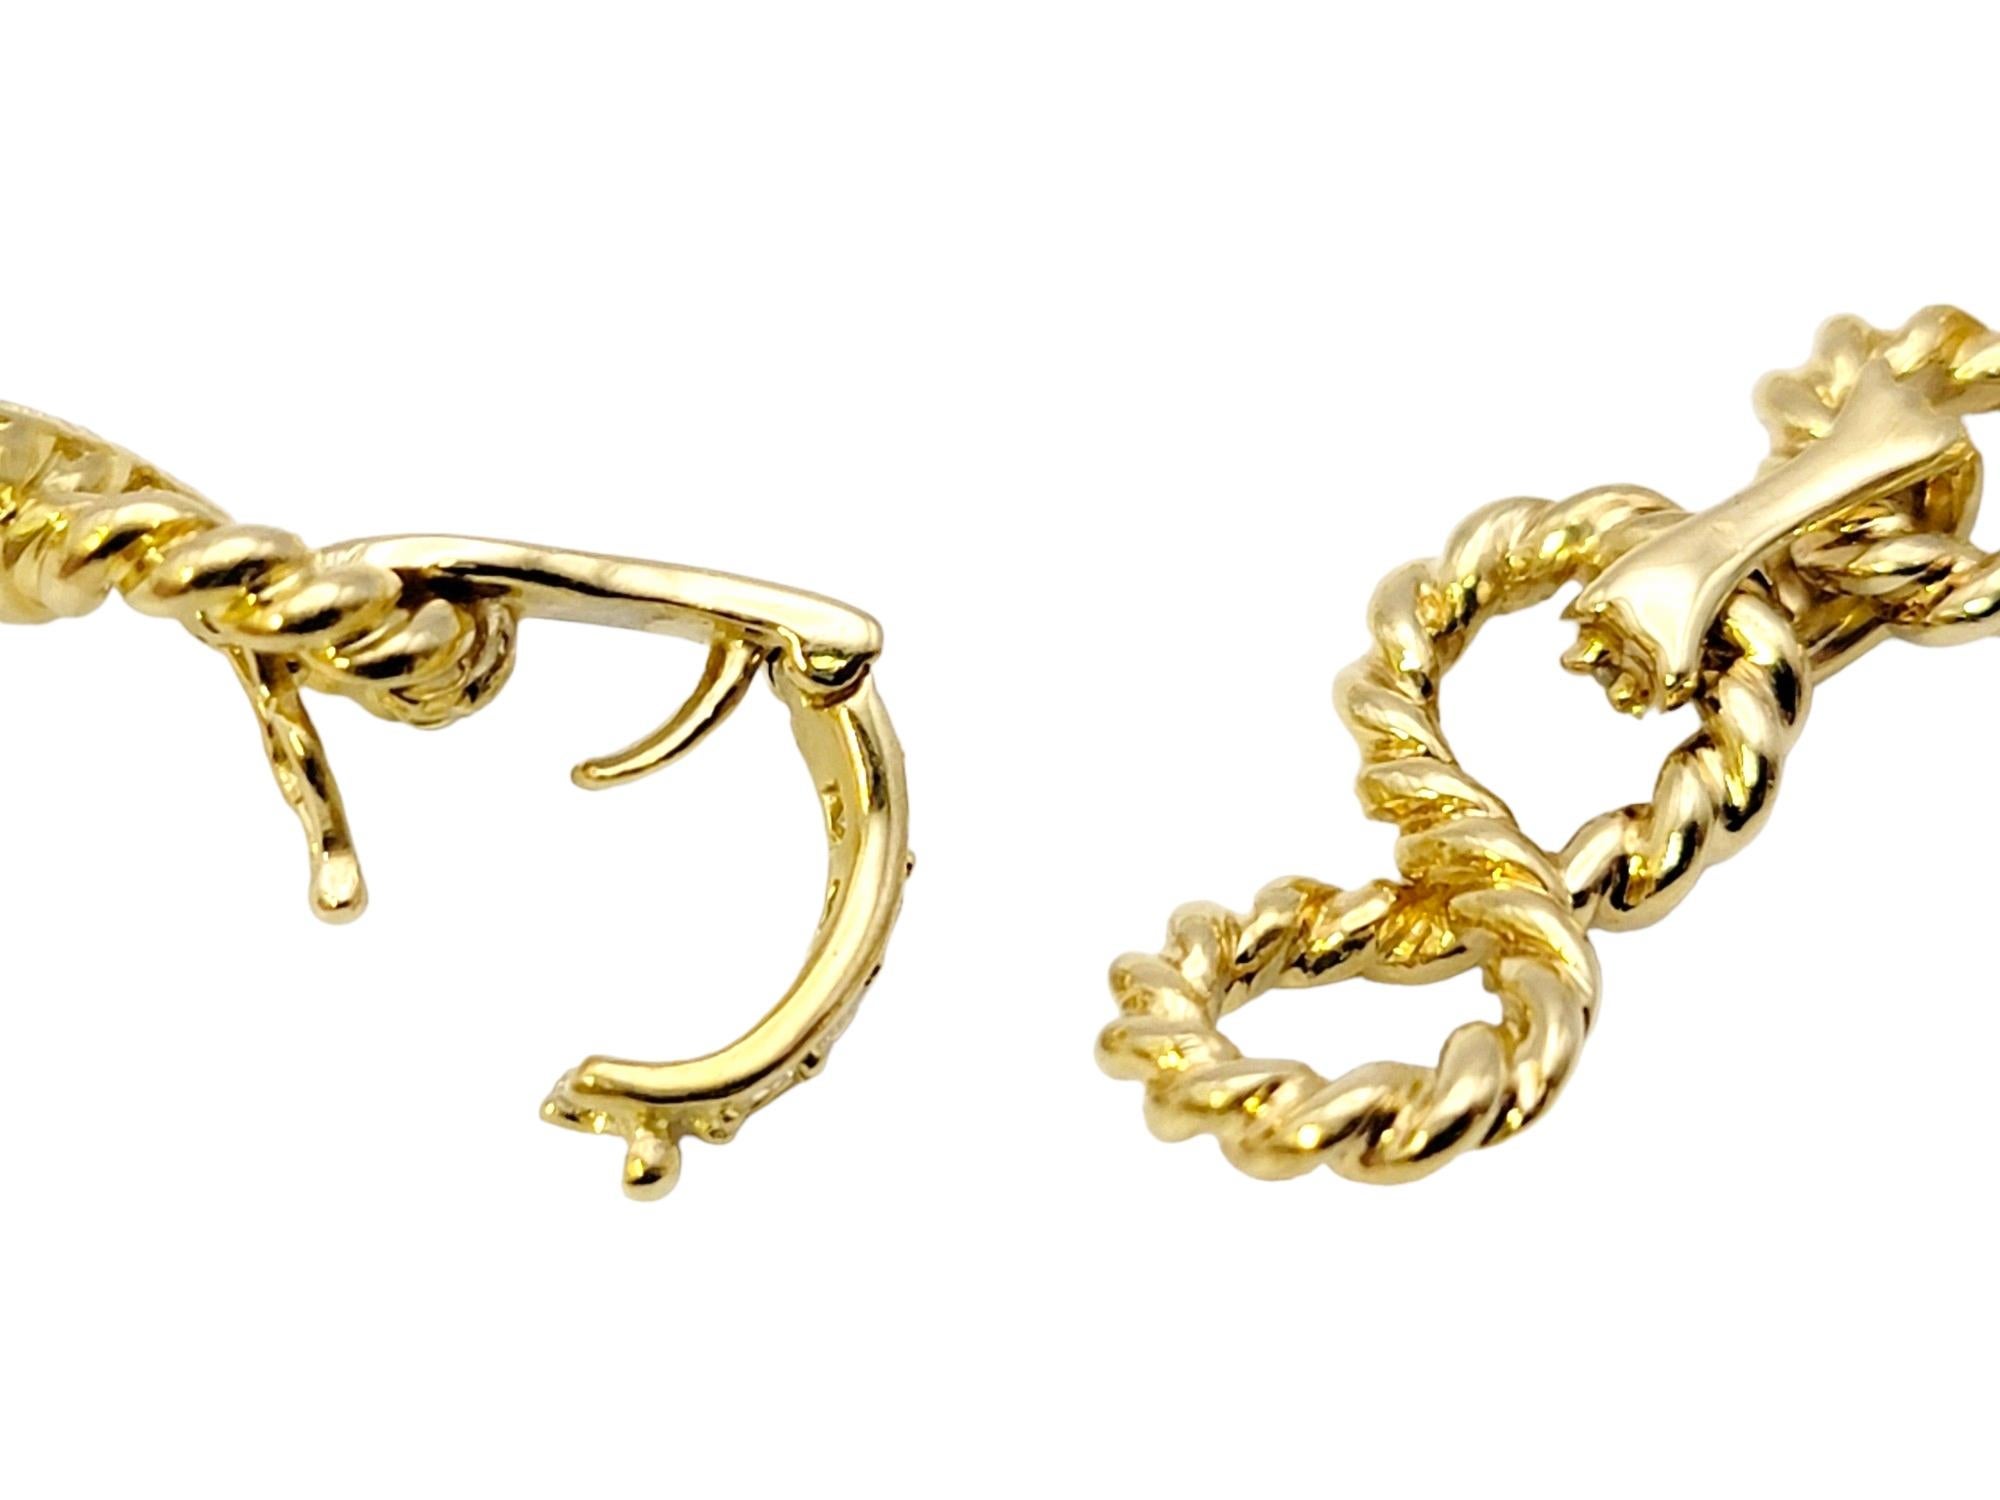 Vintage Tiffany & Co. Infinity Link Bracelet with Diamonds 18 Karat Yellow Gold 1